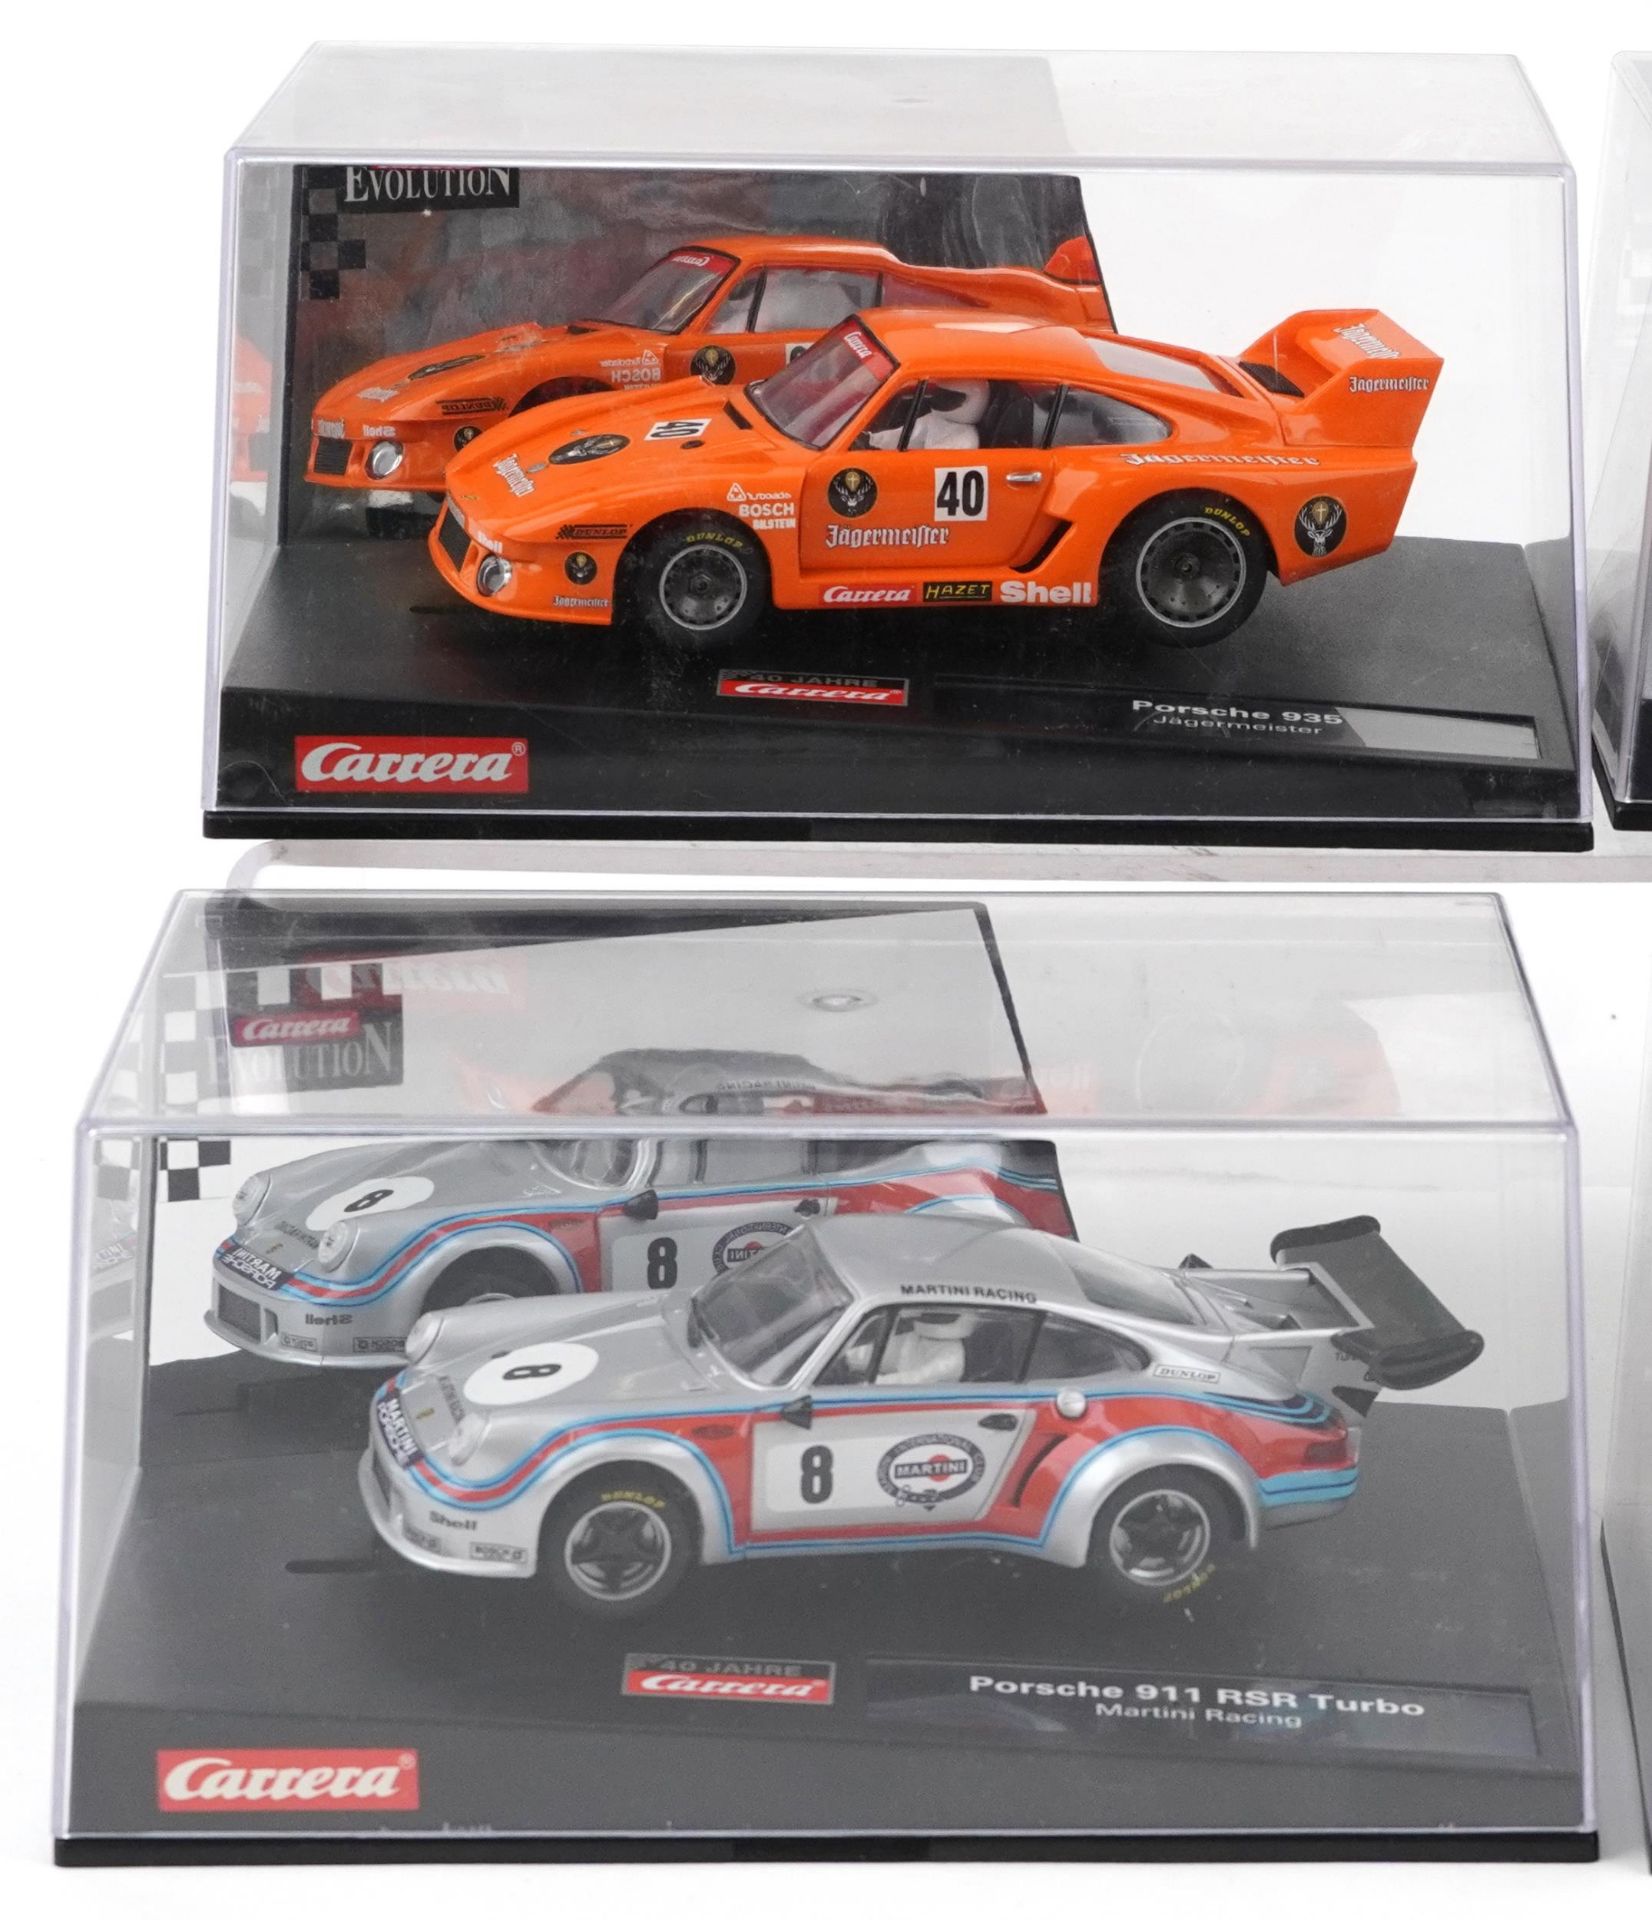 Six Carrera Evolution slot cars with cases comprising Porsche 935, Aston Martin V12 Vanquis, Audi A4 - Bild 2 aus 3